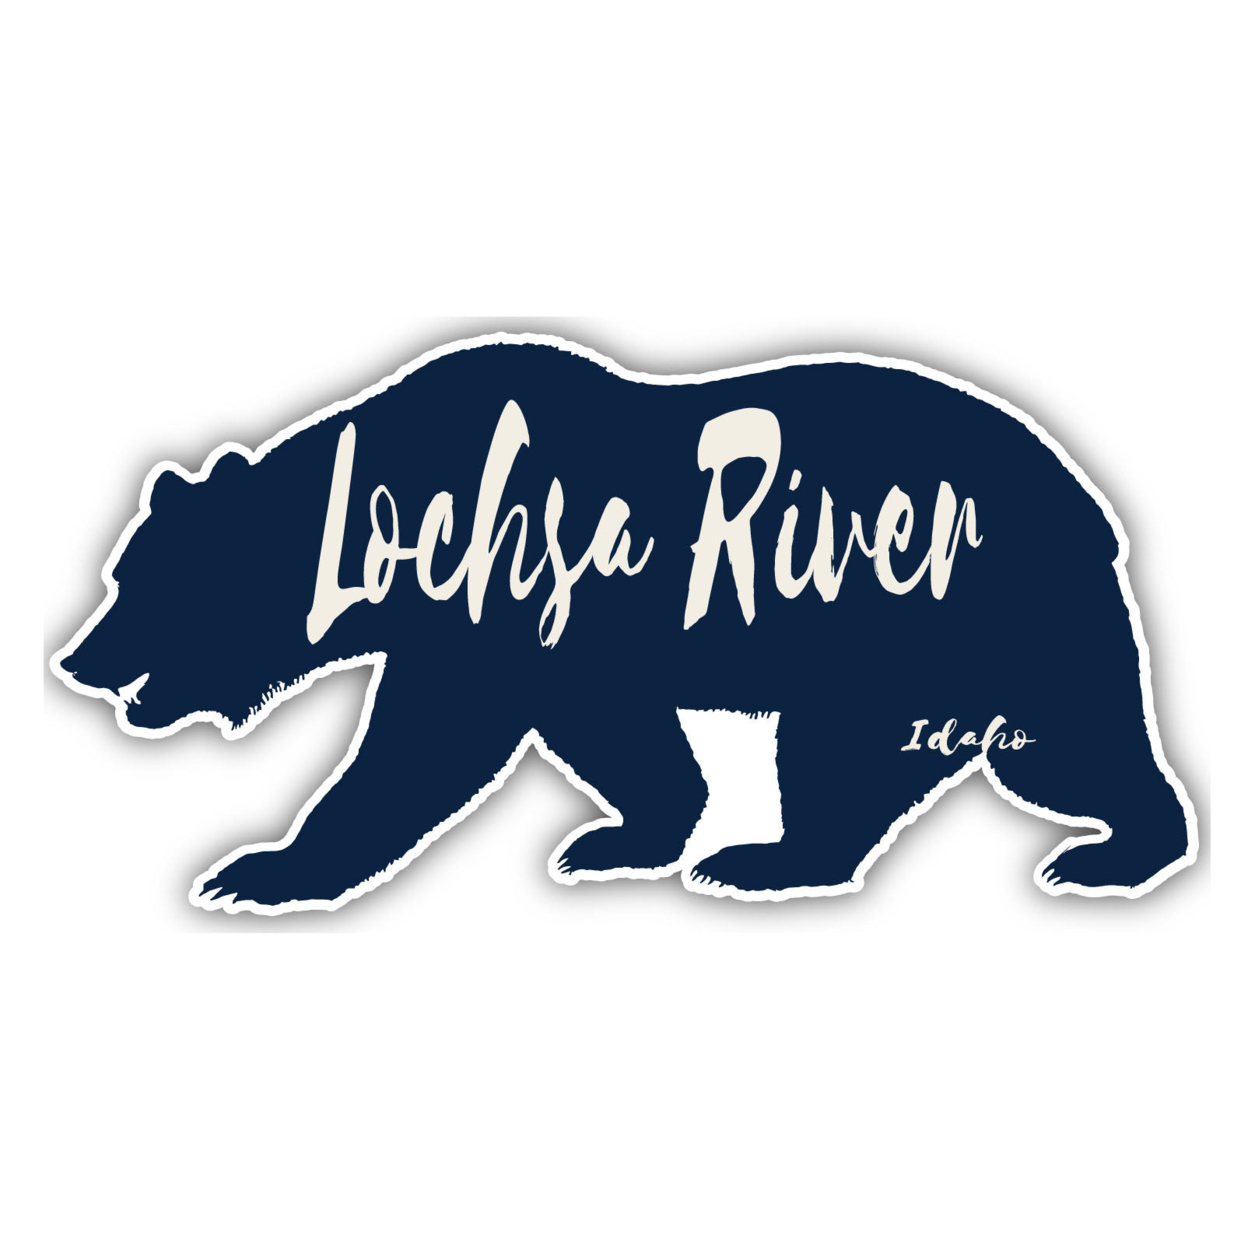 Lochsa River Idaho Souvenir Decorative Stickers (Choose Theme And Size) - 4-Inch, Bear